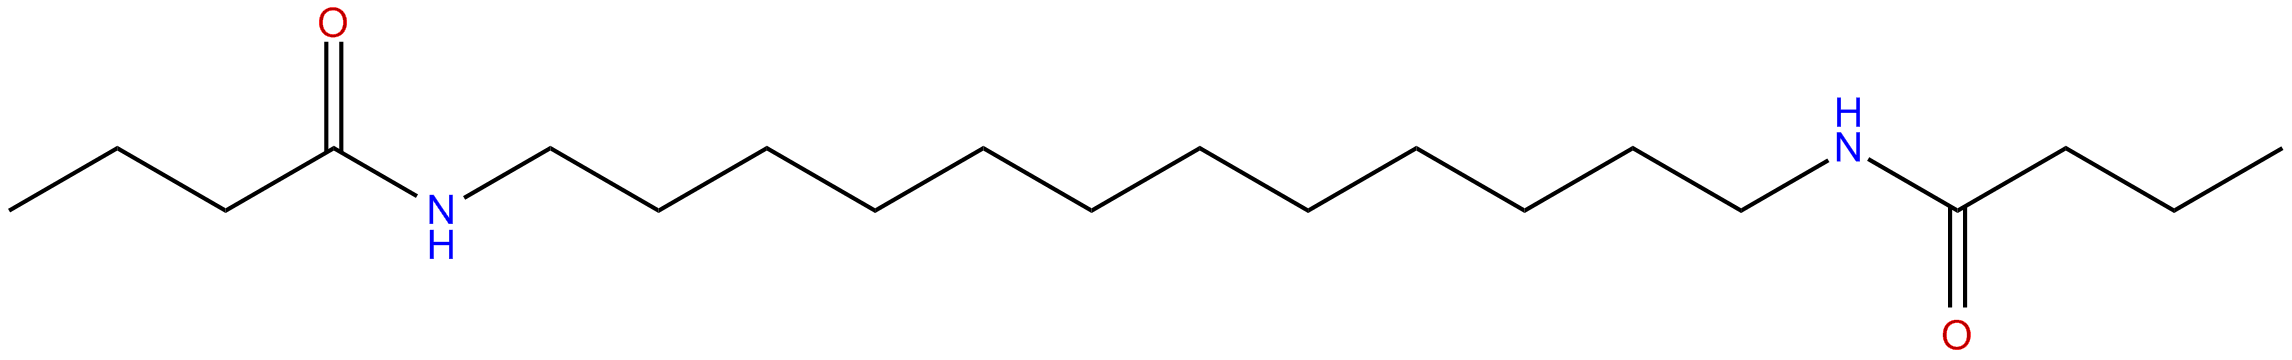 Image of N,N'-1,12-dodecanediylbisbutanamide